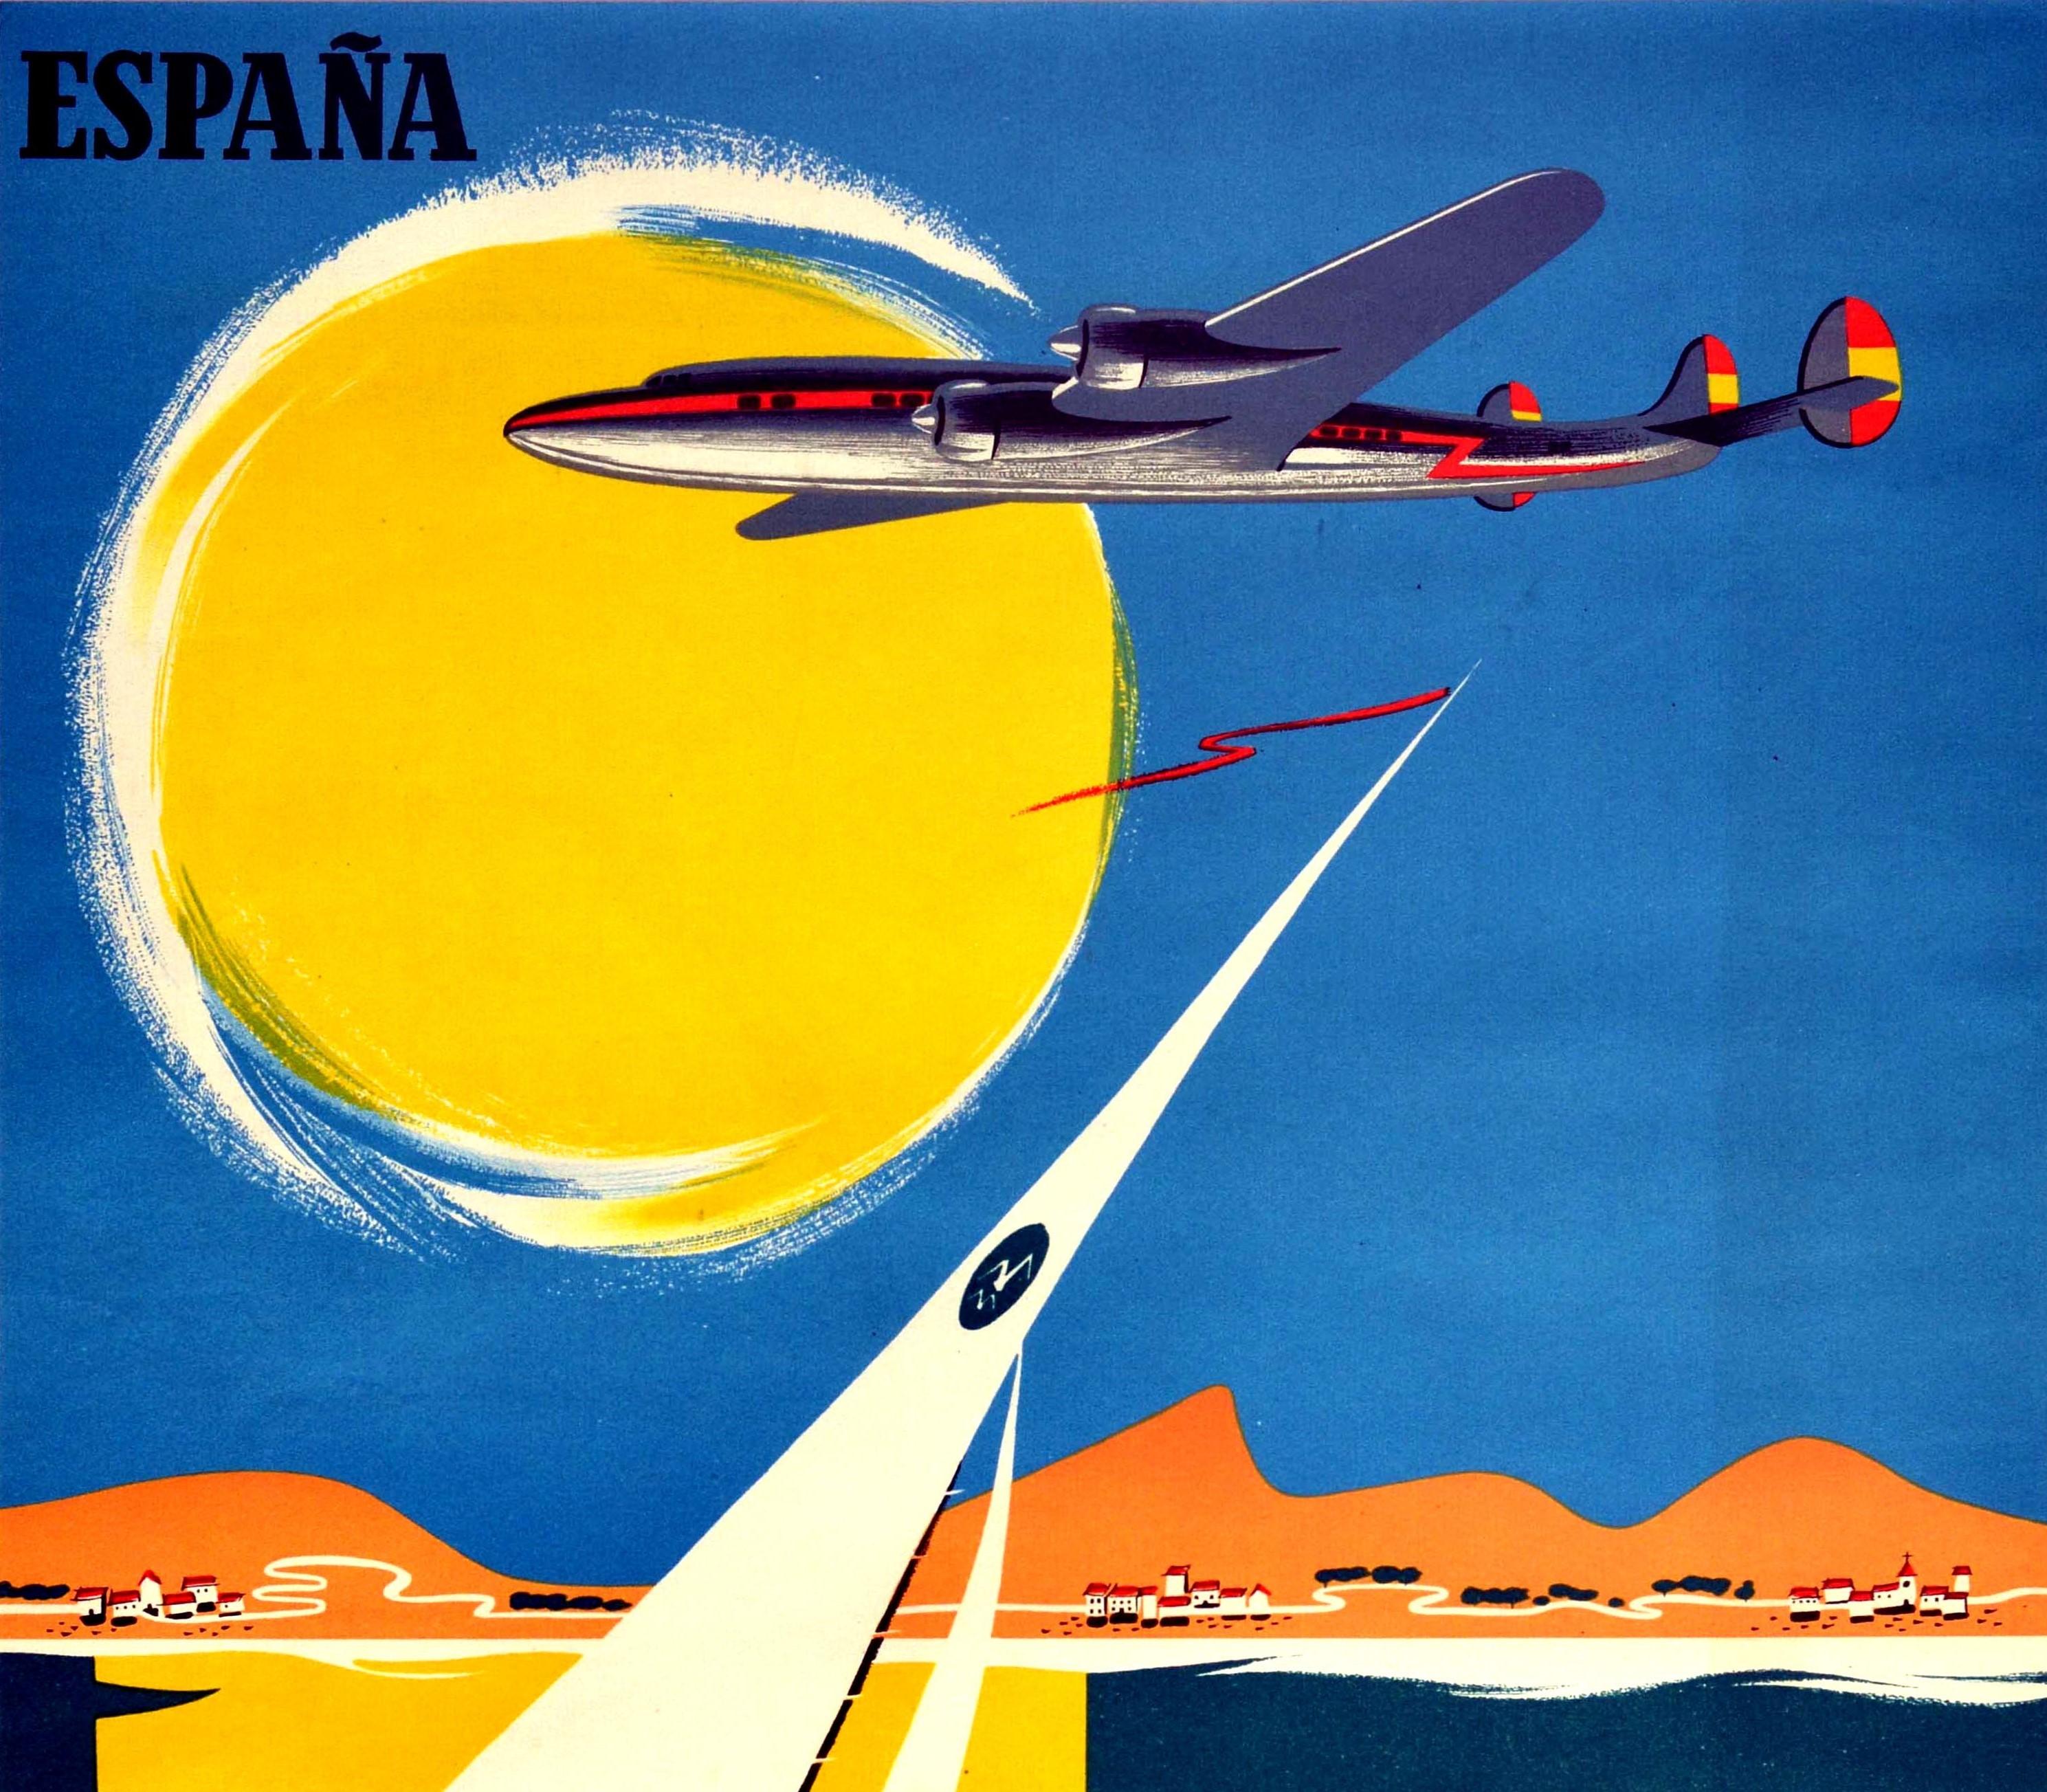 Original Vintage Poster Espana Costa Del Sol Malaga Iberia Spain Yacht Mountains - Print by Unknown